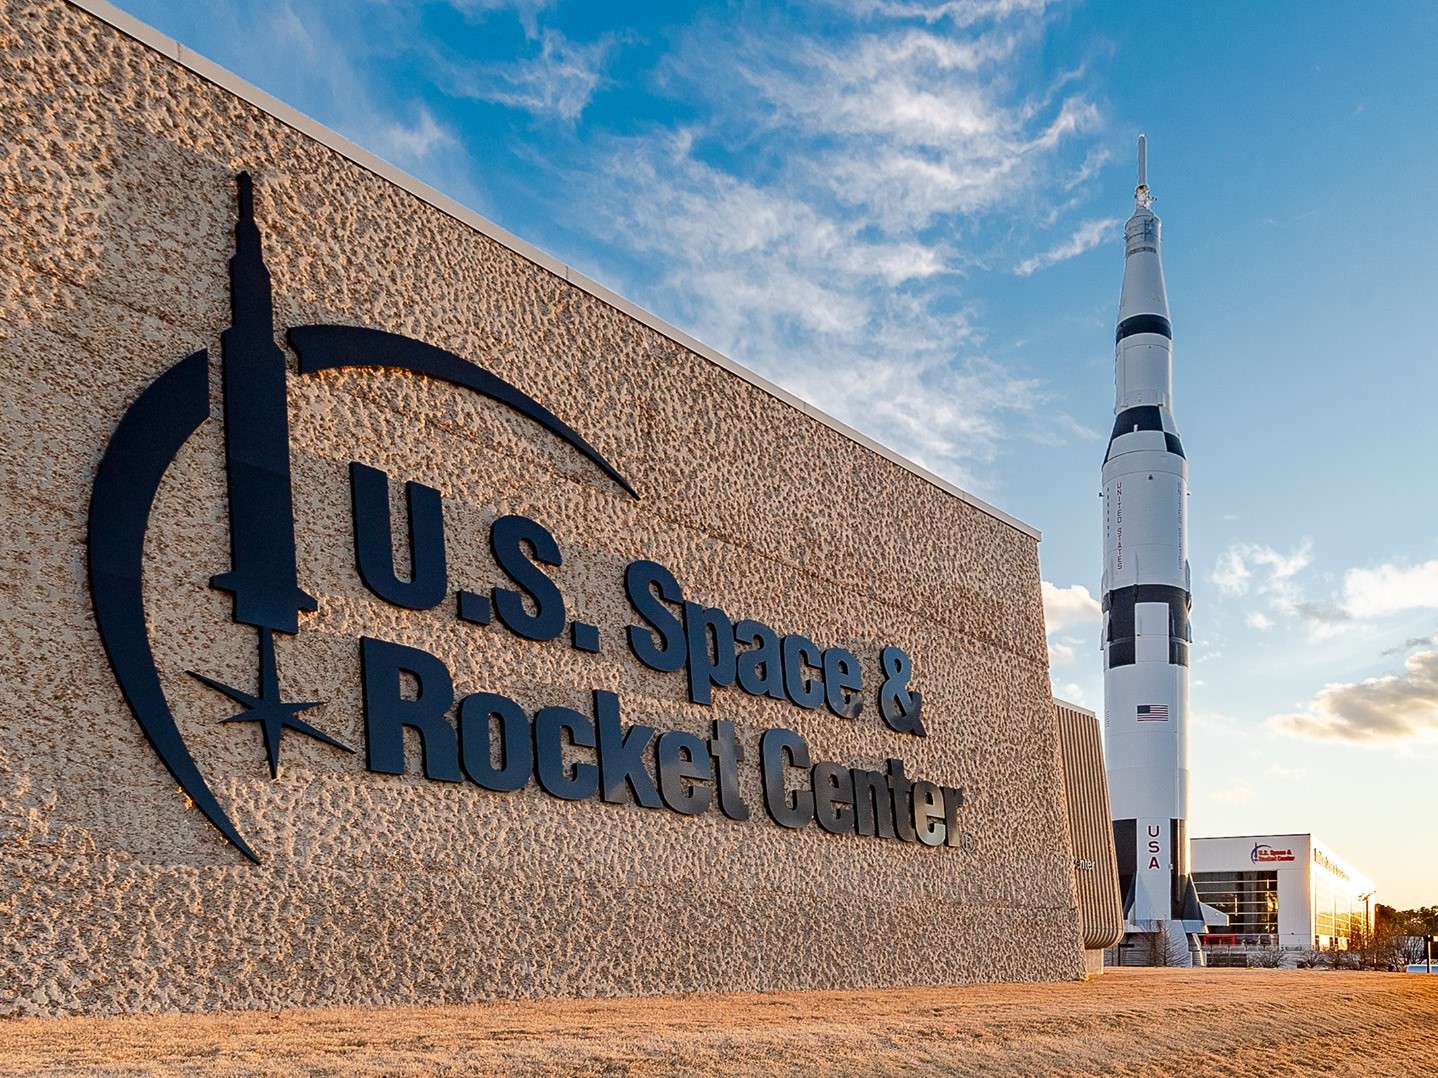 US Space & Rocket Center in Huntsville, AL